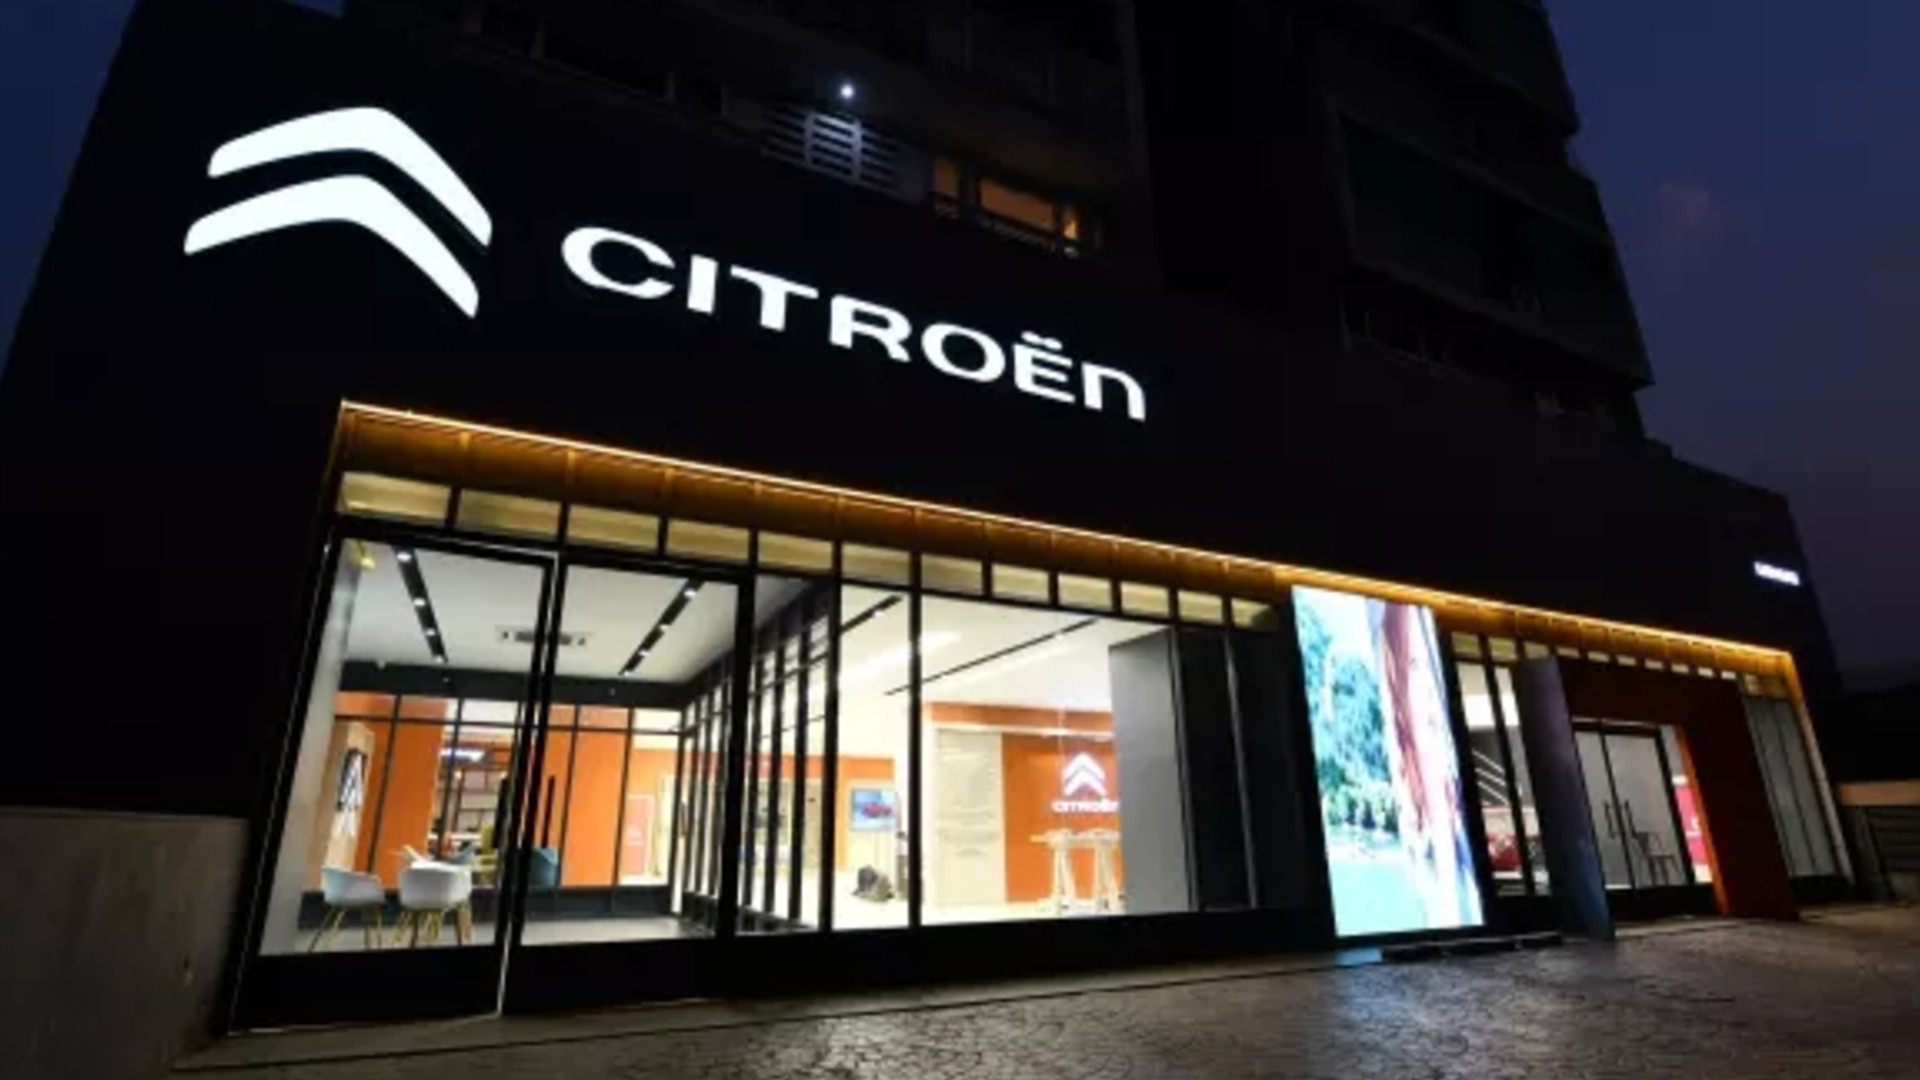 Citroen inaugurates six showrooms ahead of C5 Aircross launch